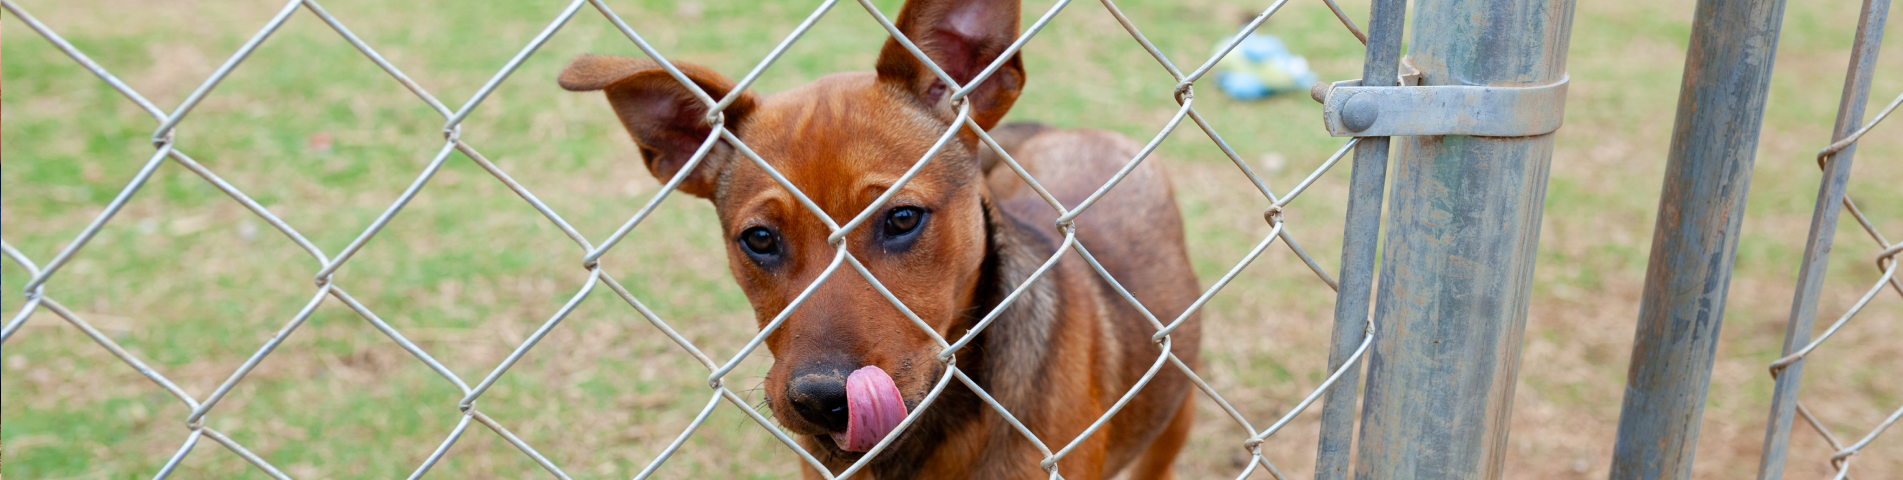 a dog licking its nose through a fence